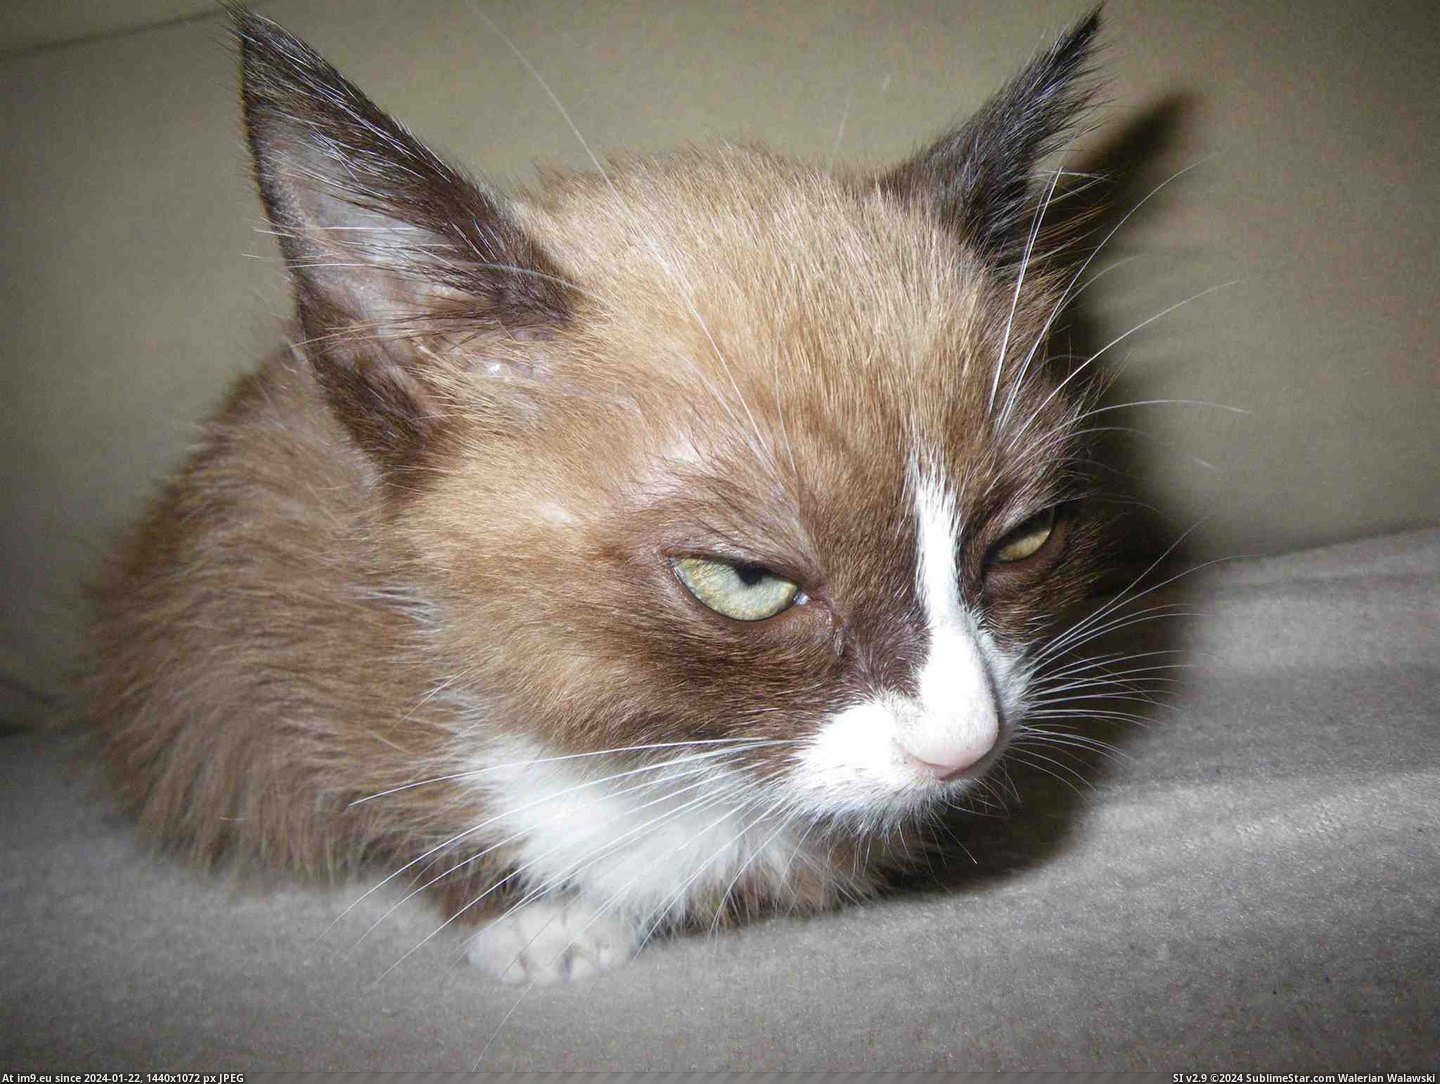 #Cats #Brother #Grumpy #Cat [Cats] My brother's cat looks like Grumpy Cat Pic. (Bild von album My r/CATS favs))